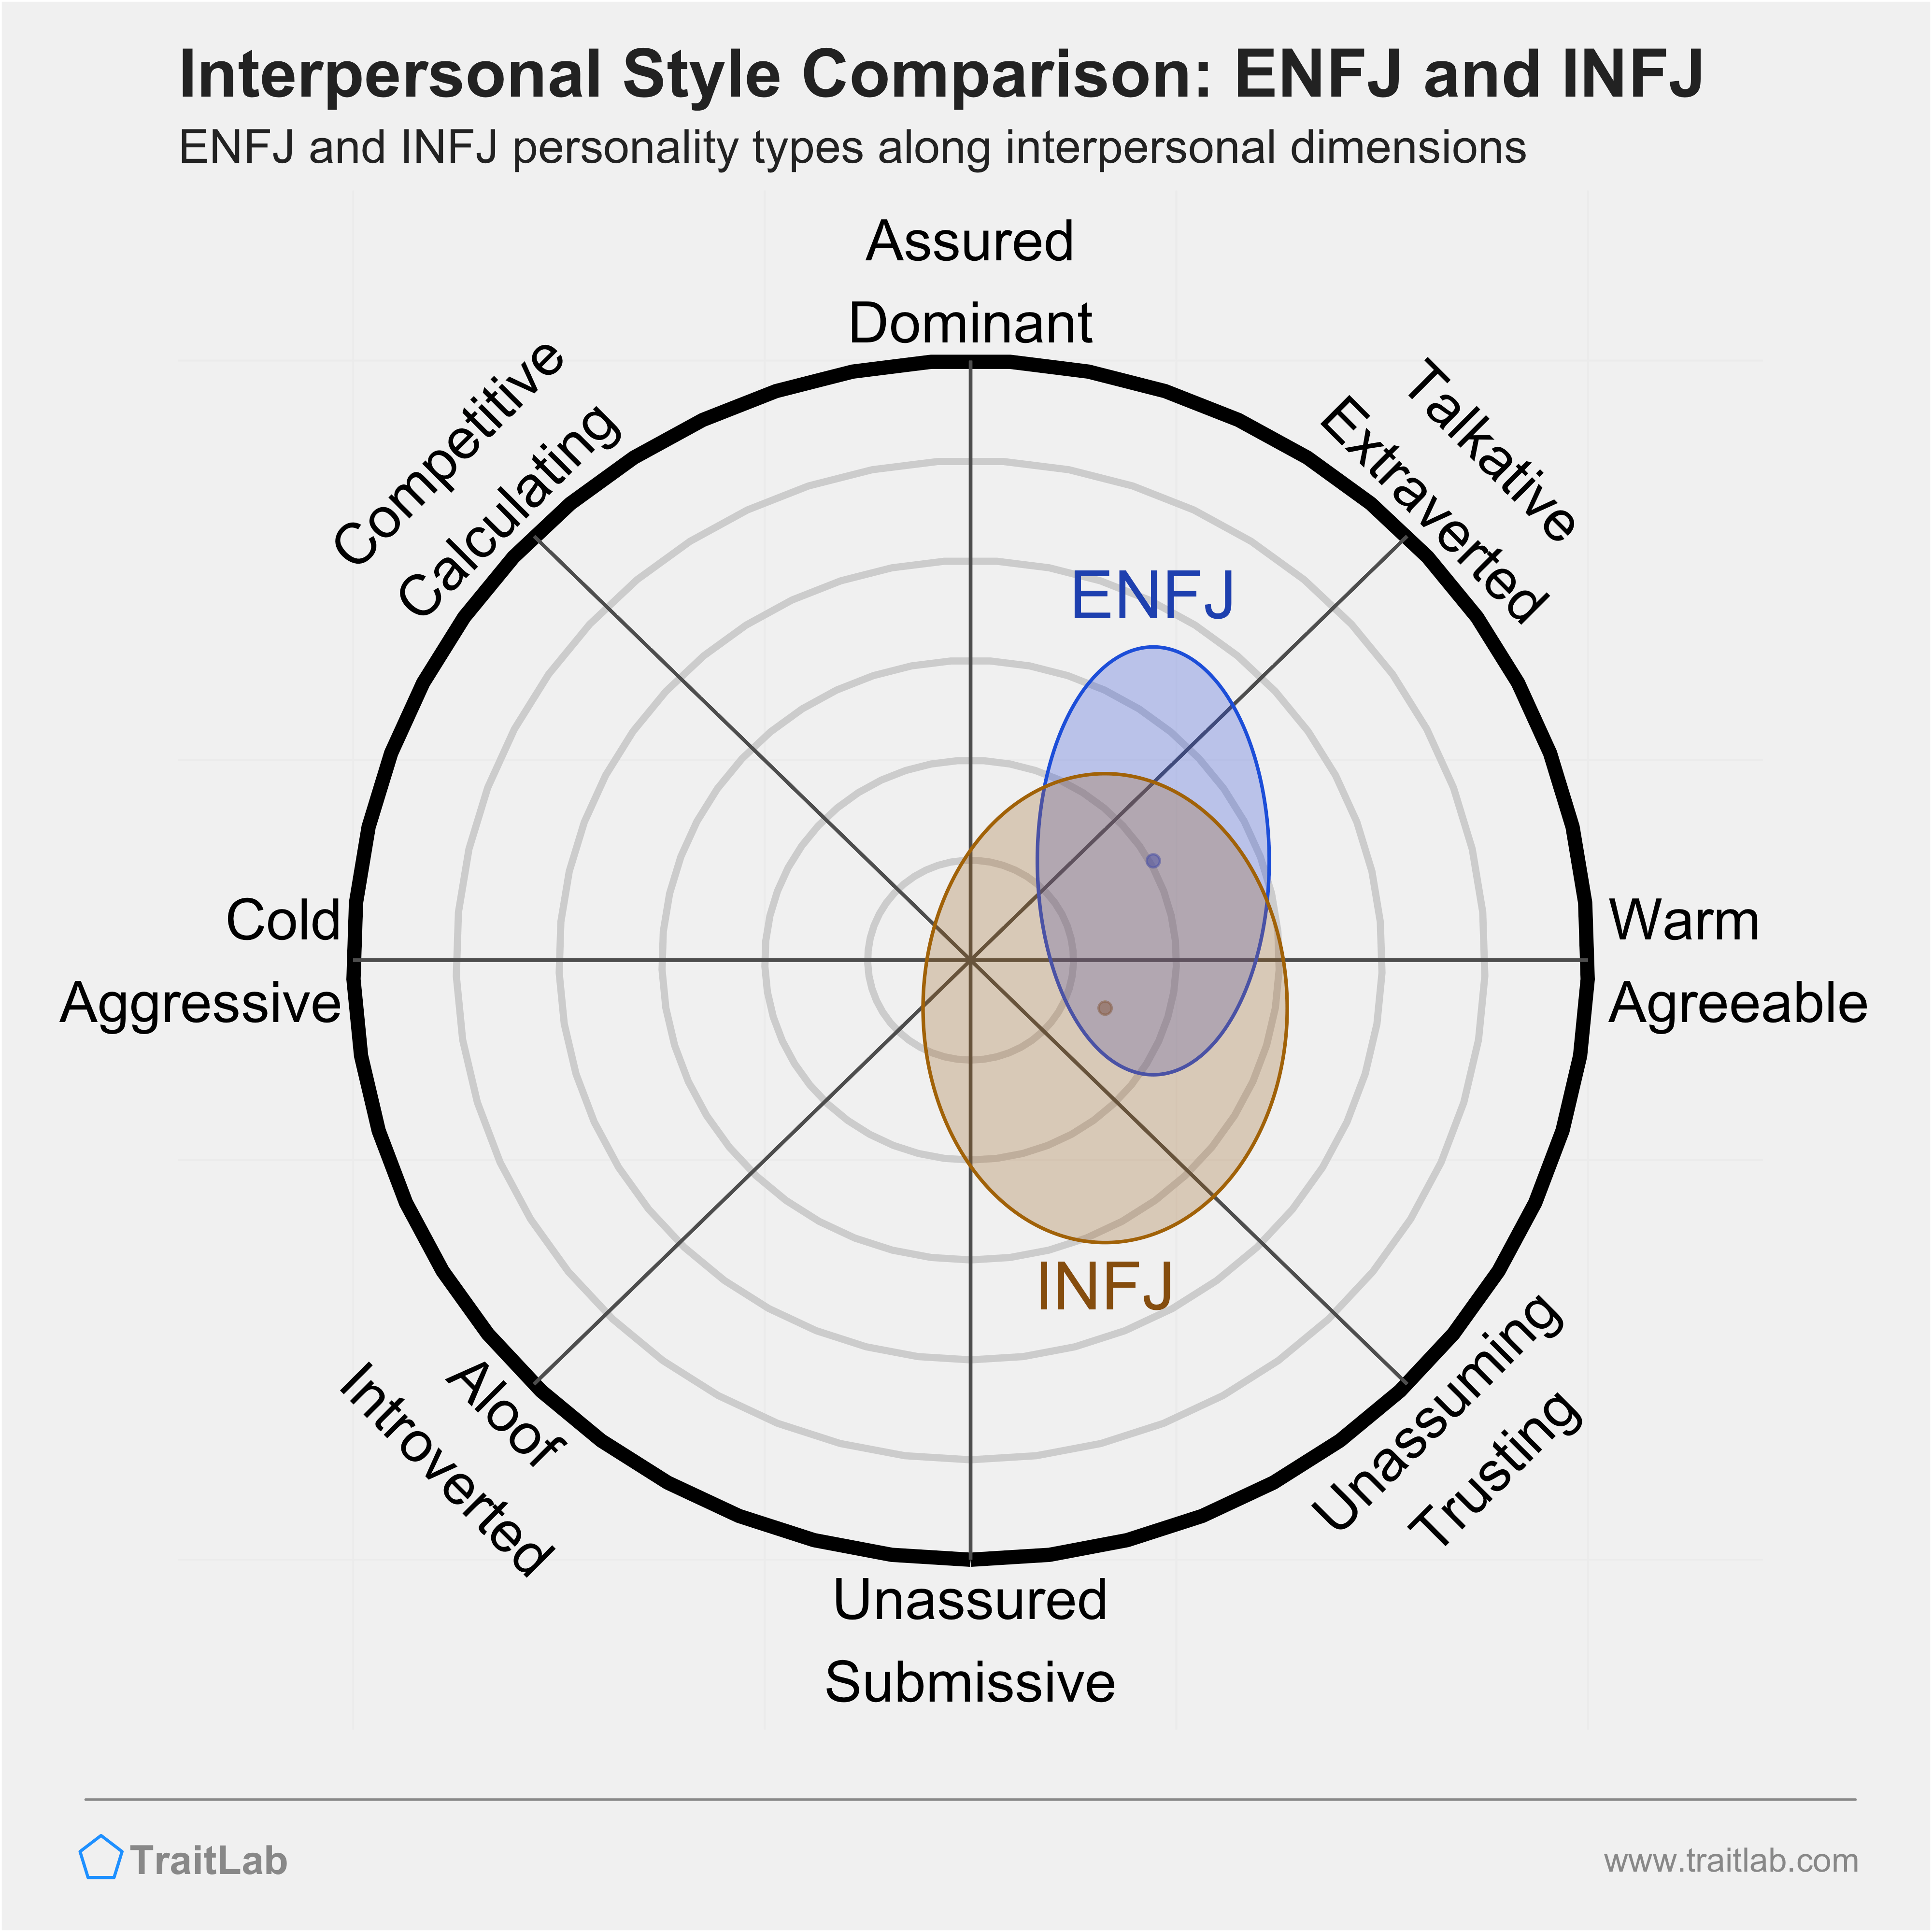 ENFJ and INFJ comparison across interpersonal dimensions